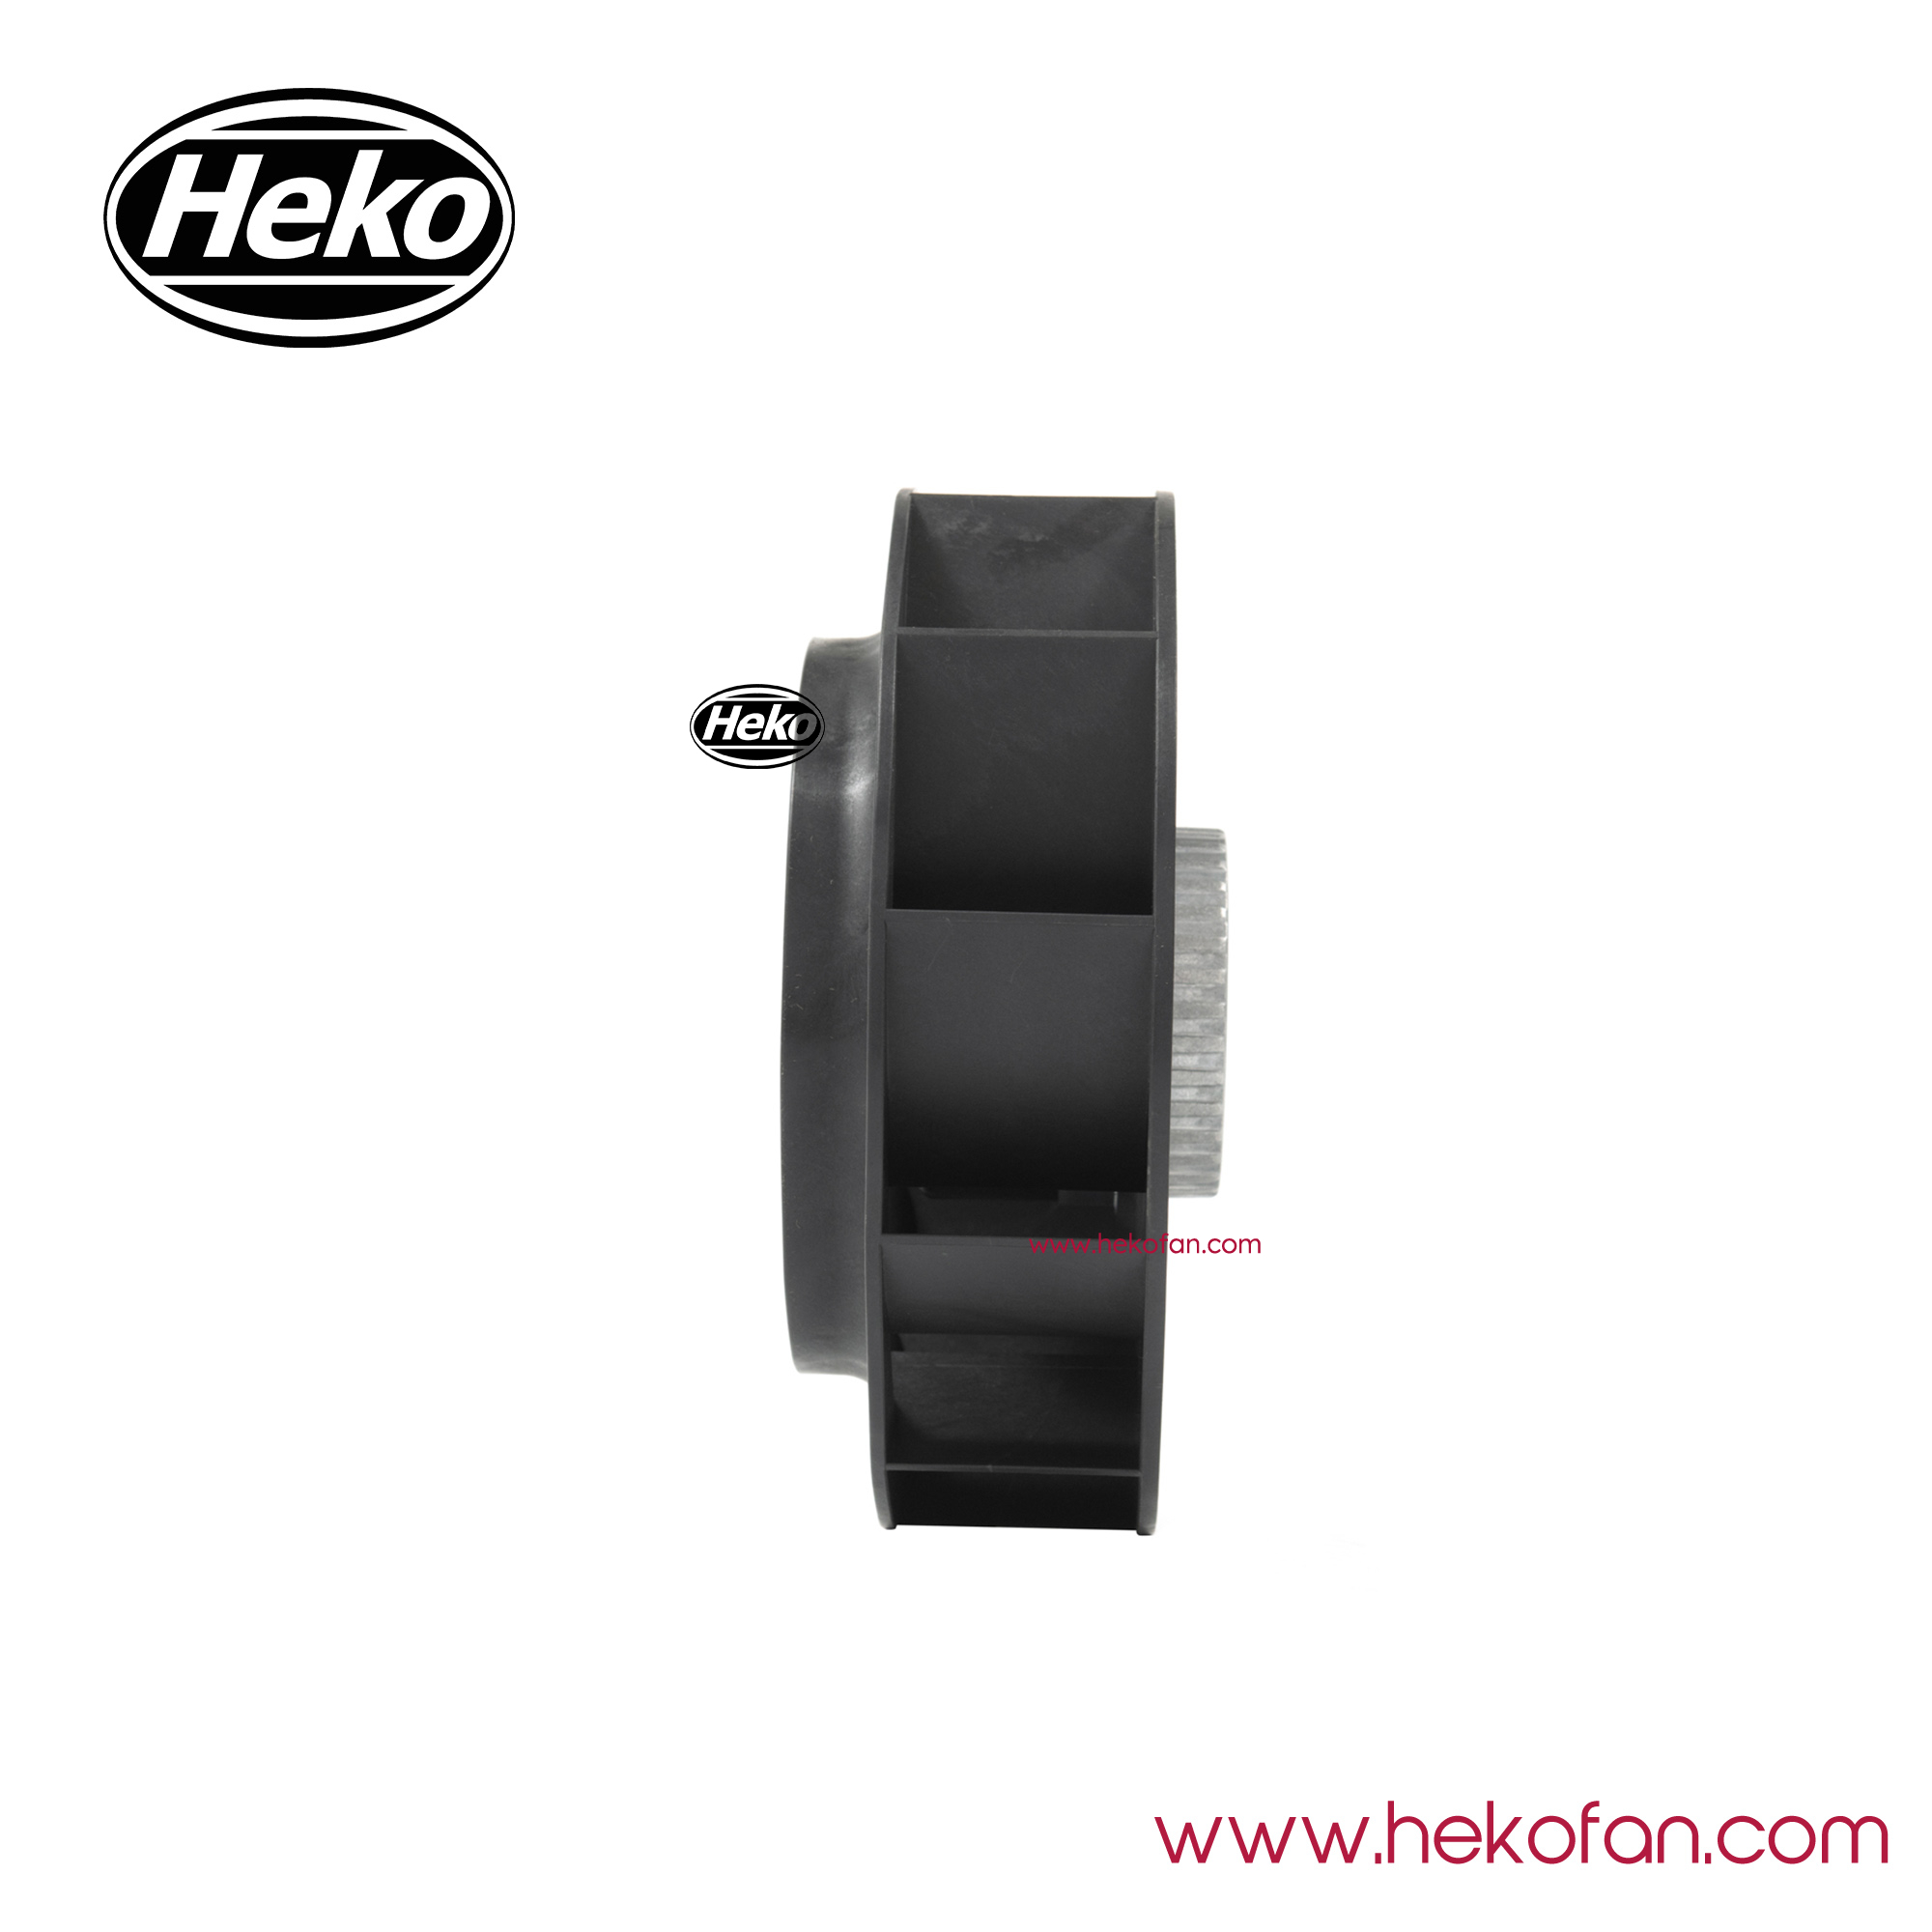 Ventilateur centrifuge industriel HEKO DC190mm